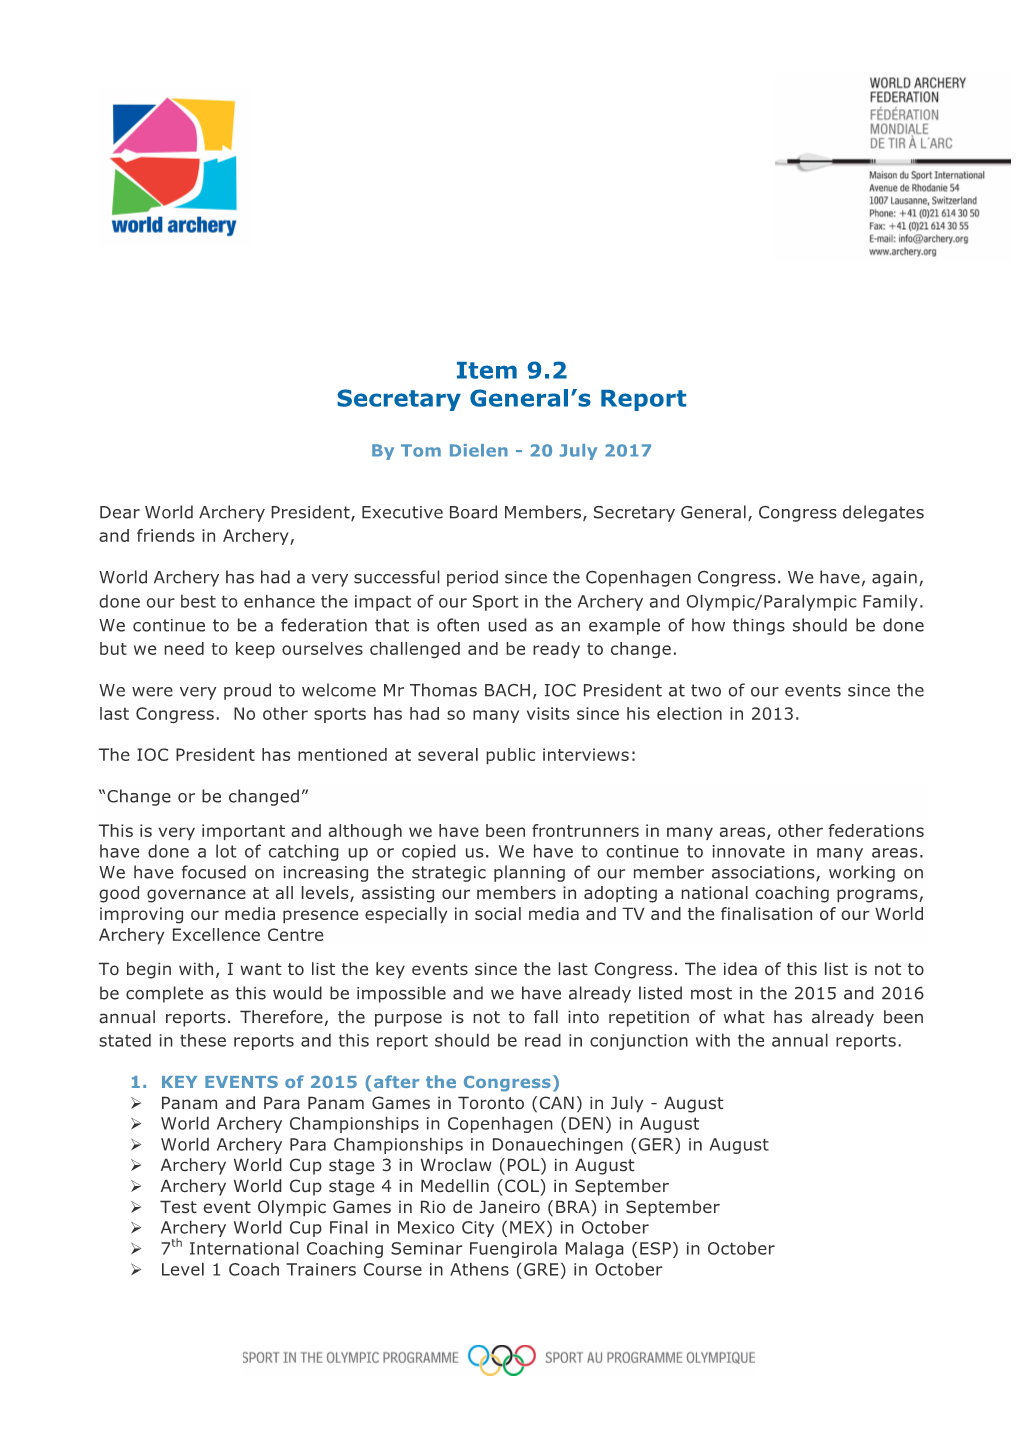 Item 9.2 Secretary General's Report